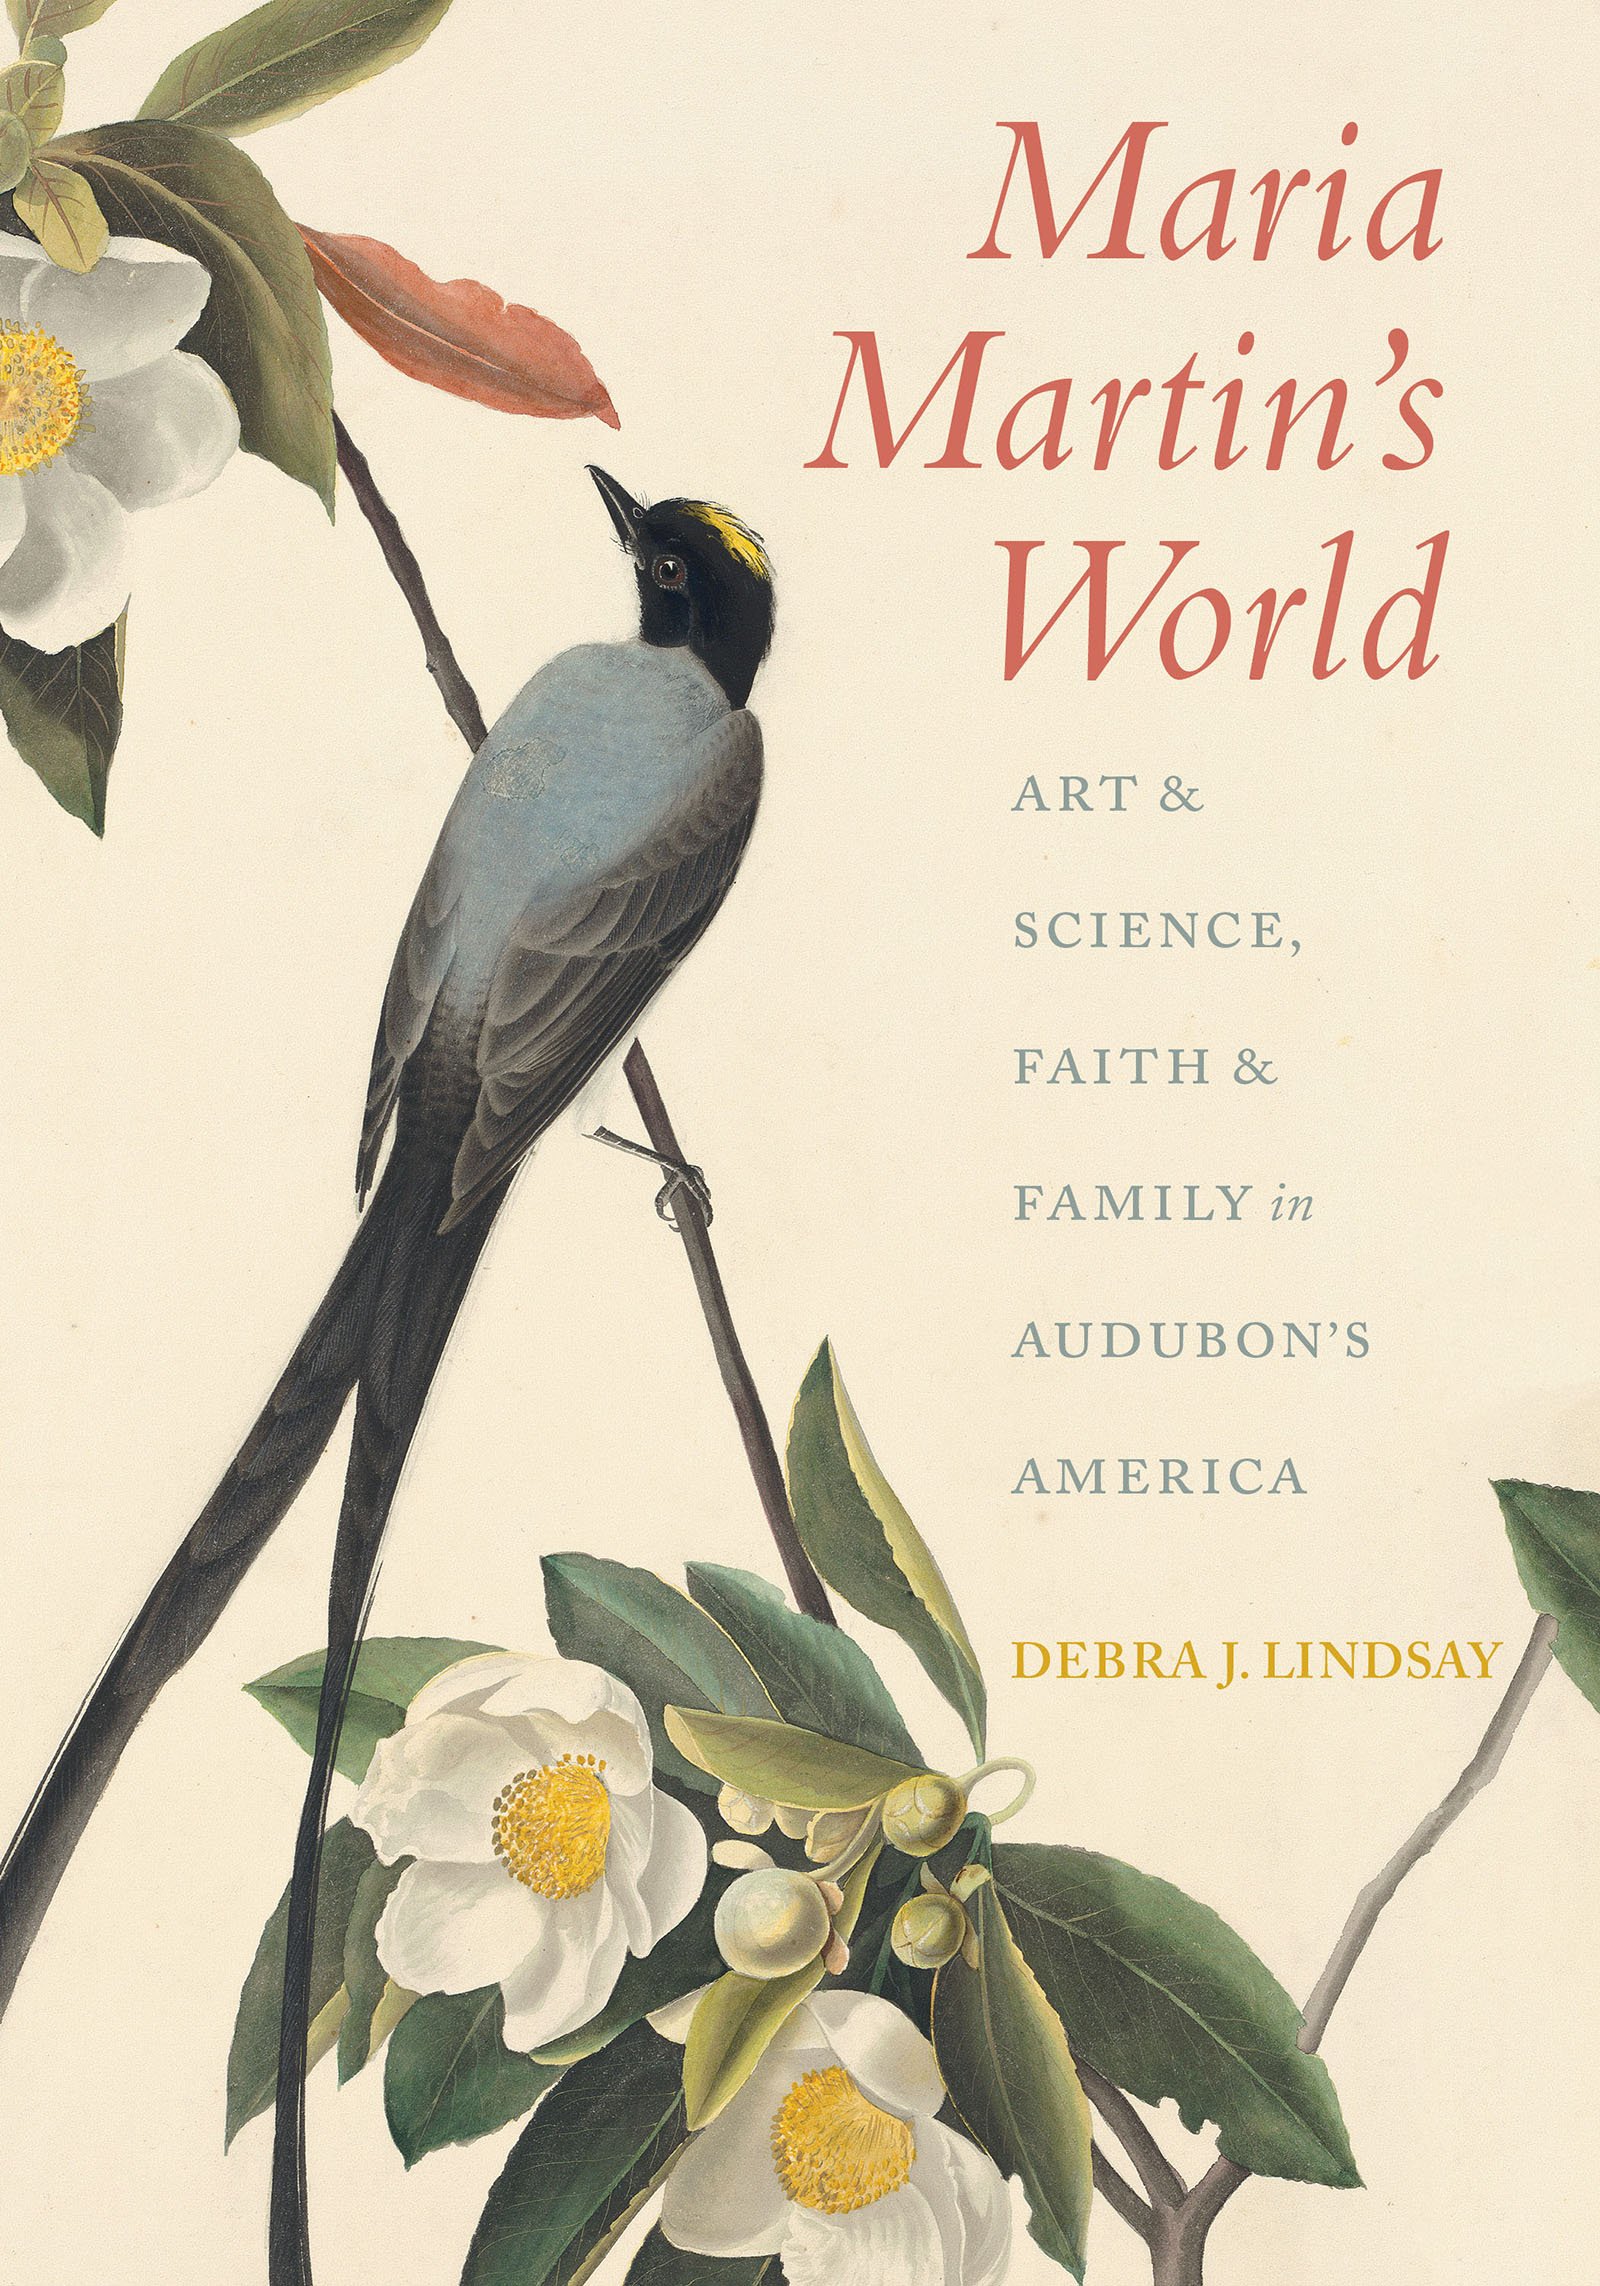 Book Talk with Debra J. Lindsay, Author of Maria Martin's World